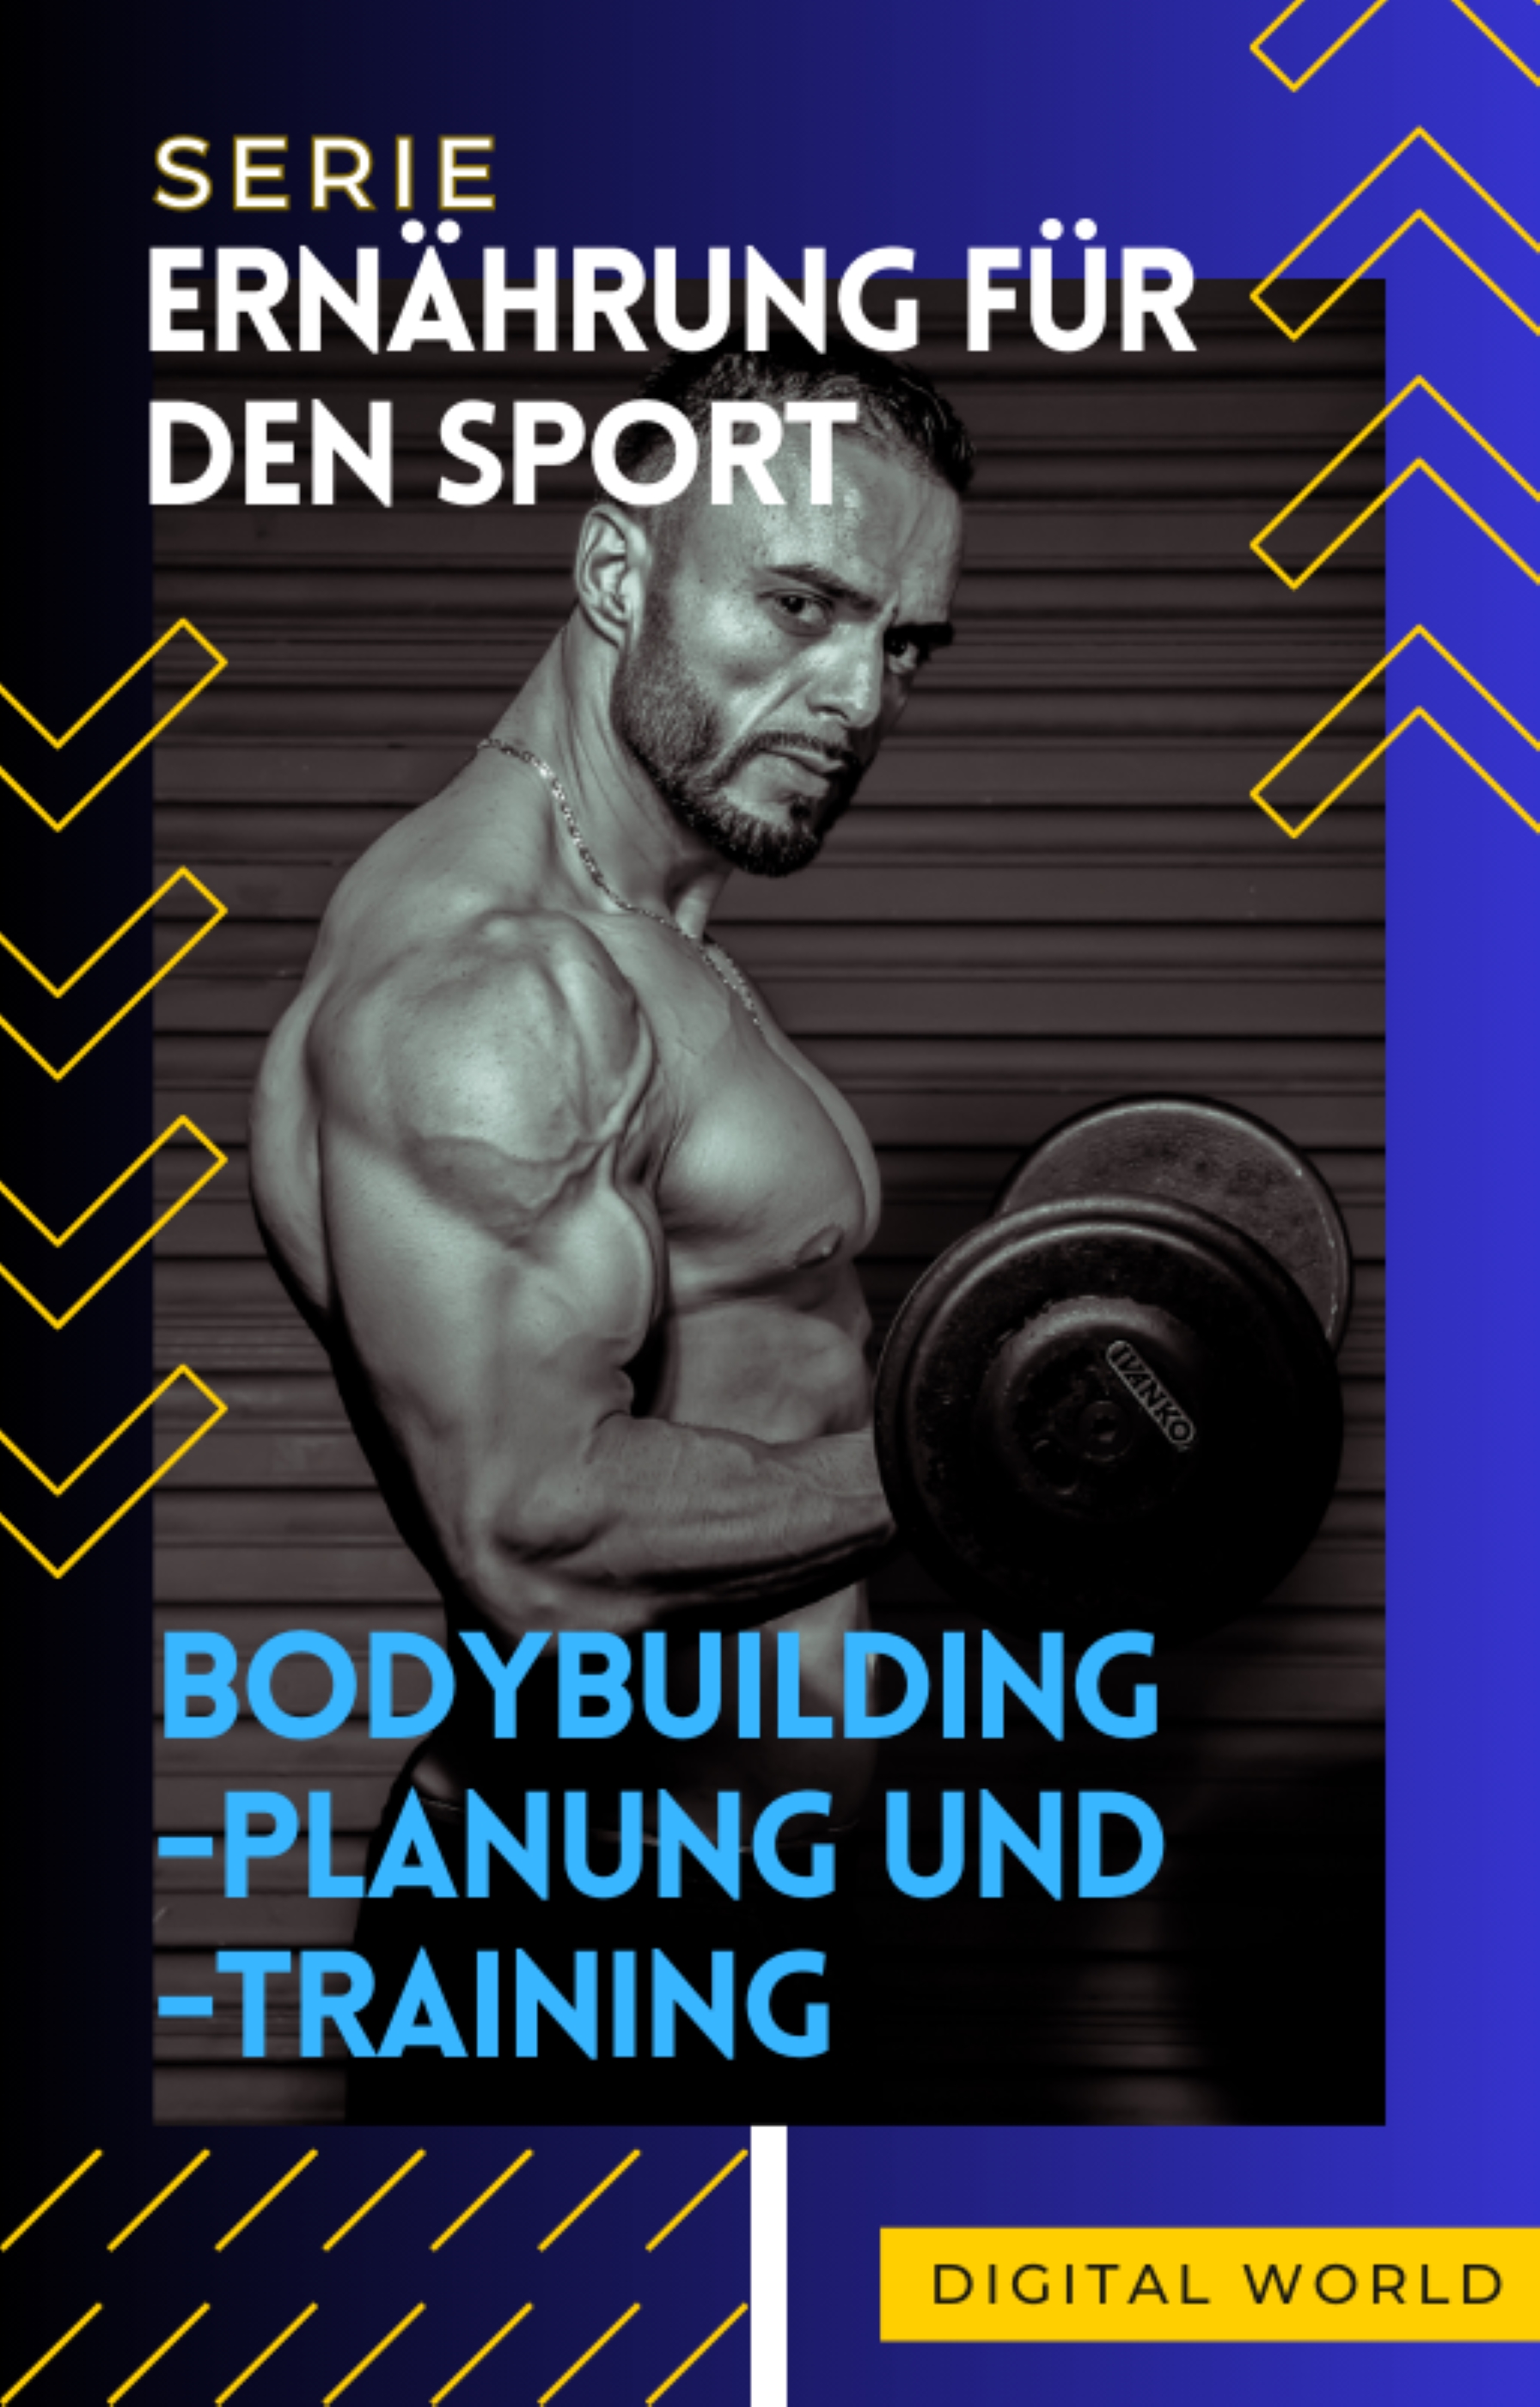 Bodybuilding-Planung und -Training